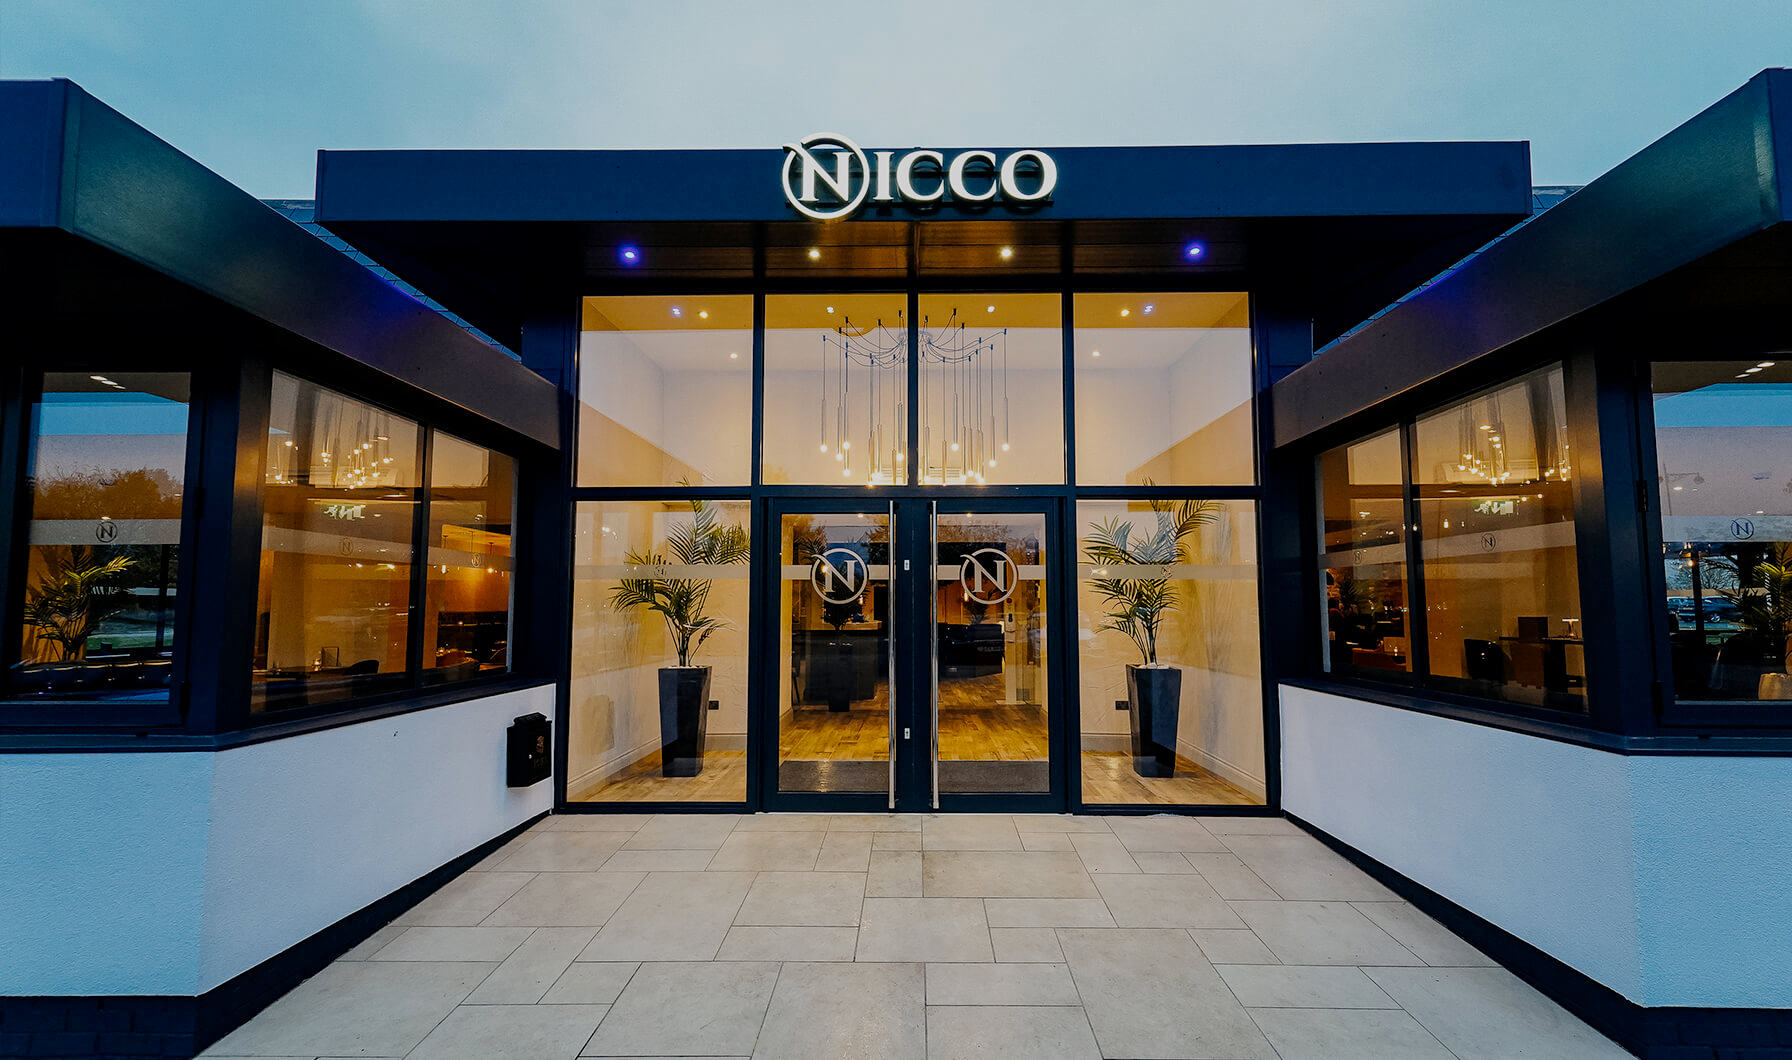 Nicco Restaurant and Bar